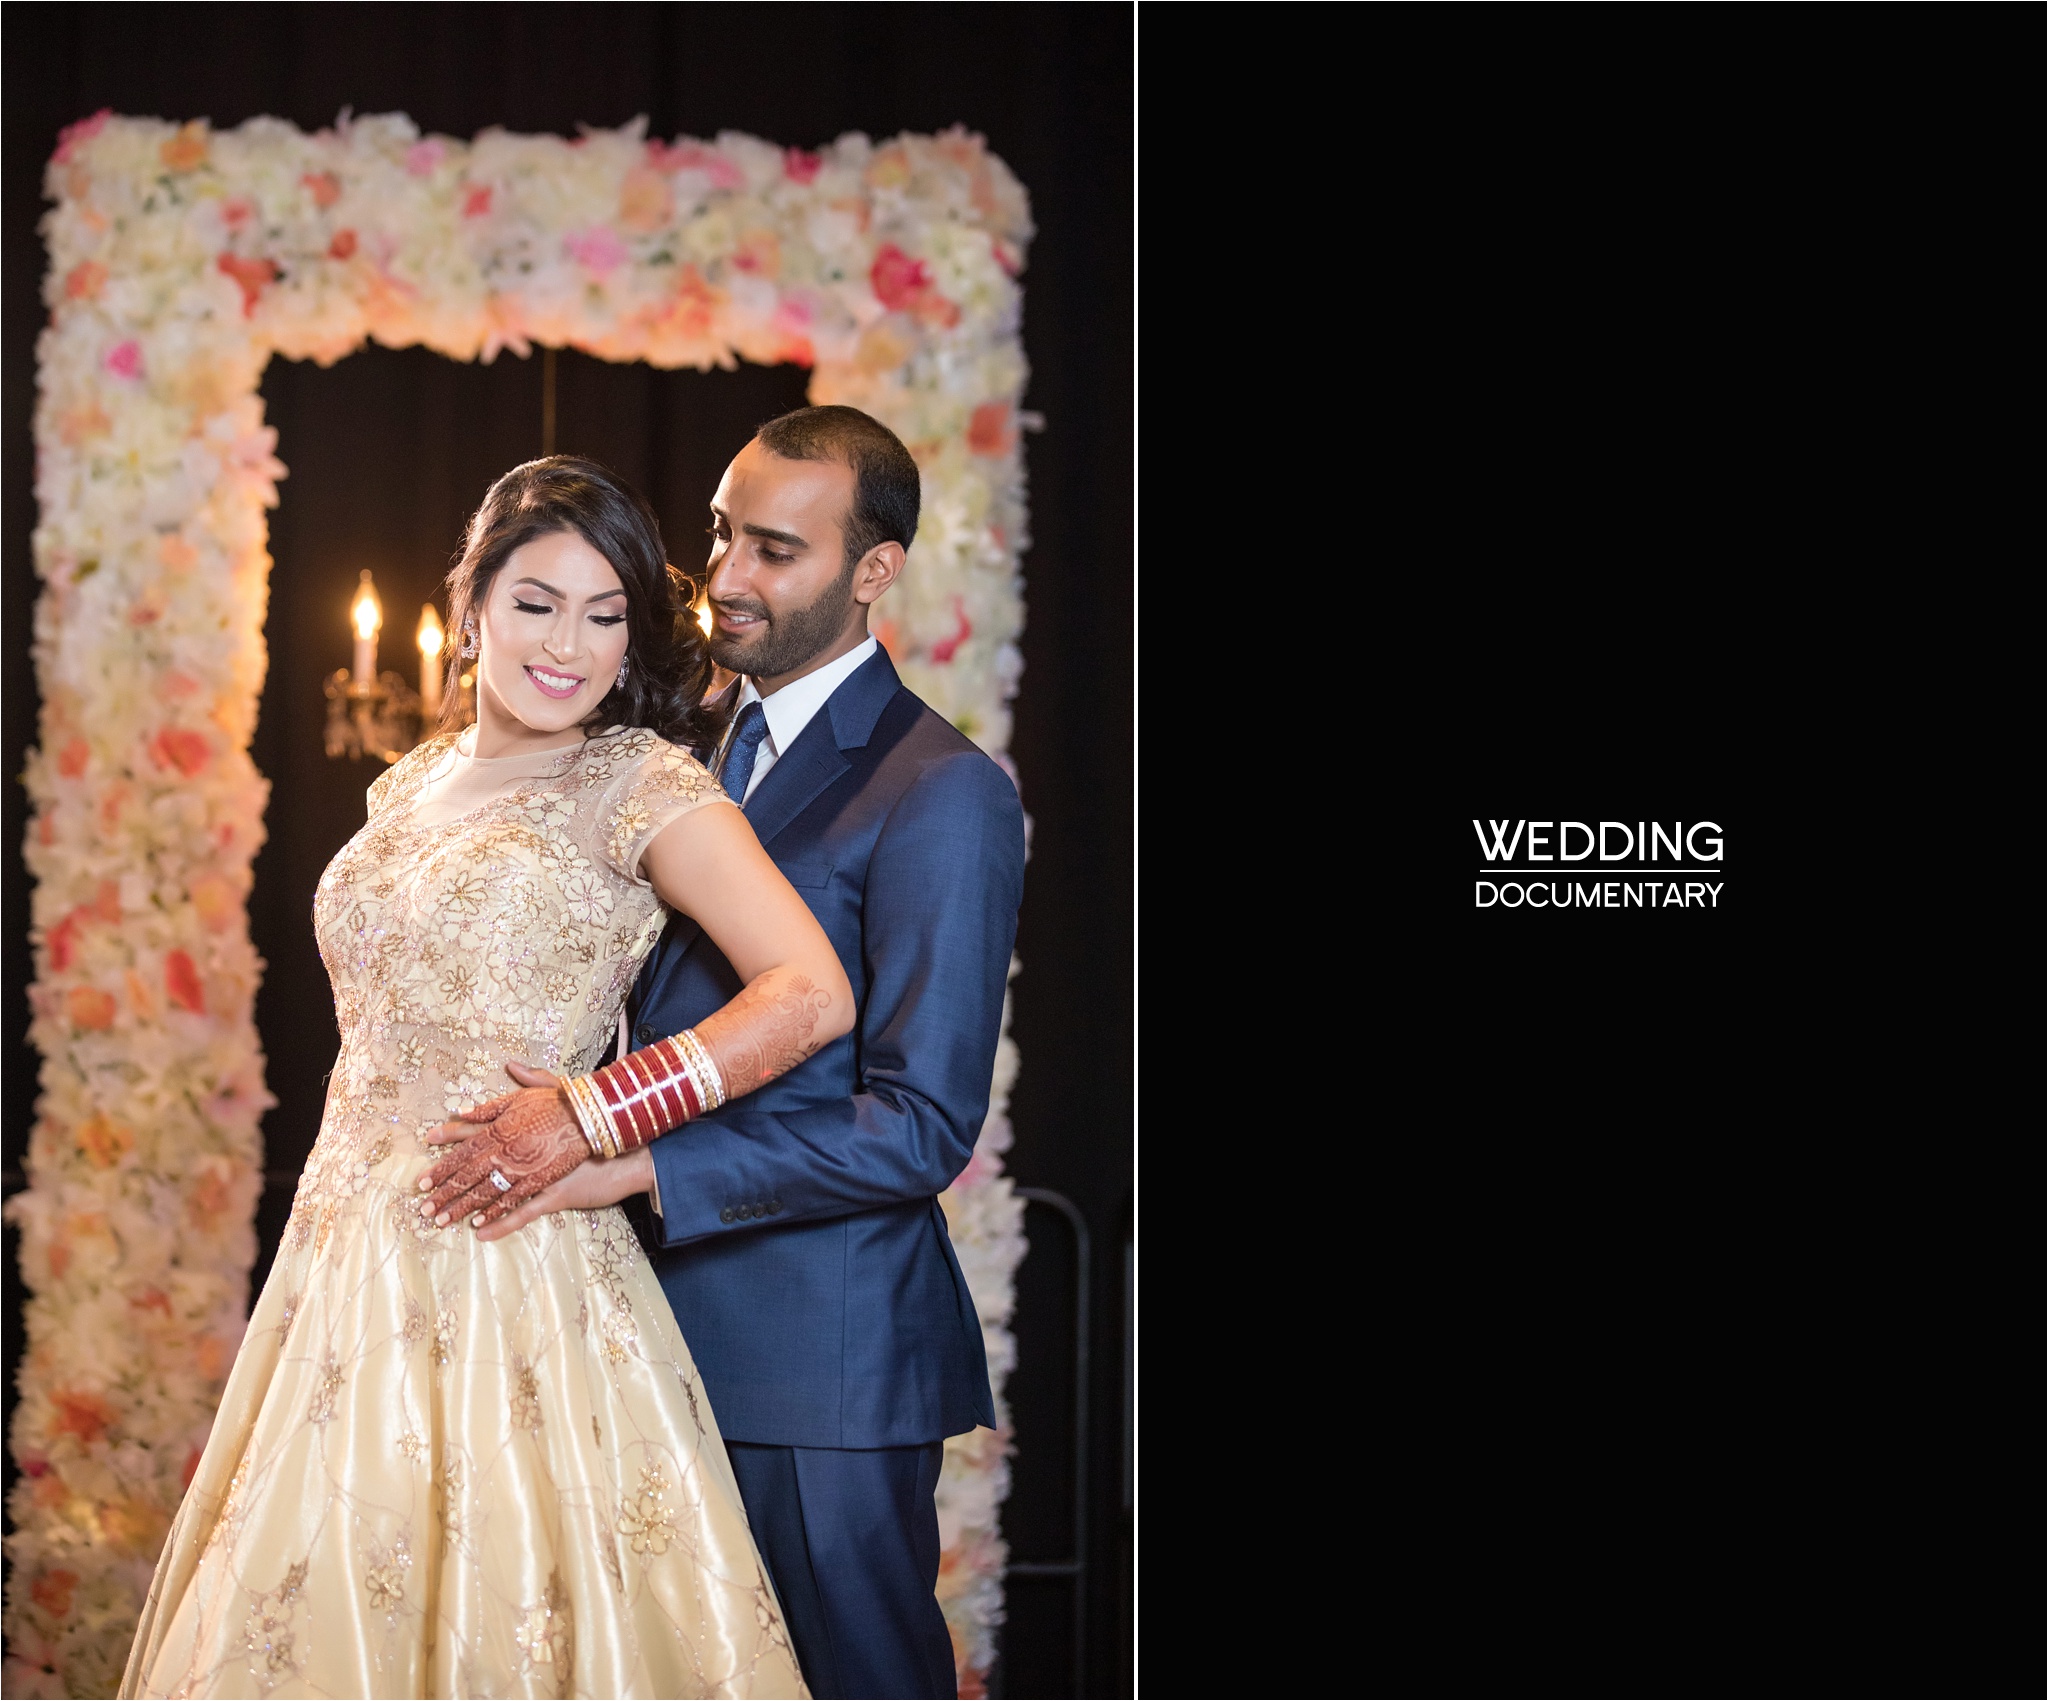 Modesto_Center_Plaza_Indian_Wedding_Reception_0007.jpg